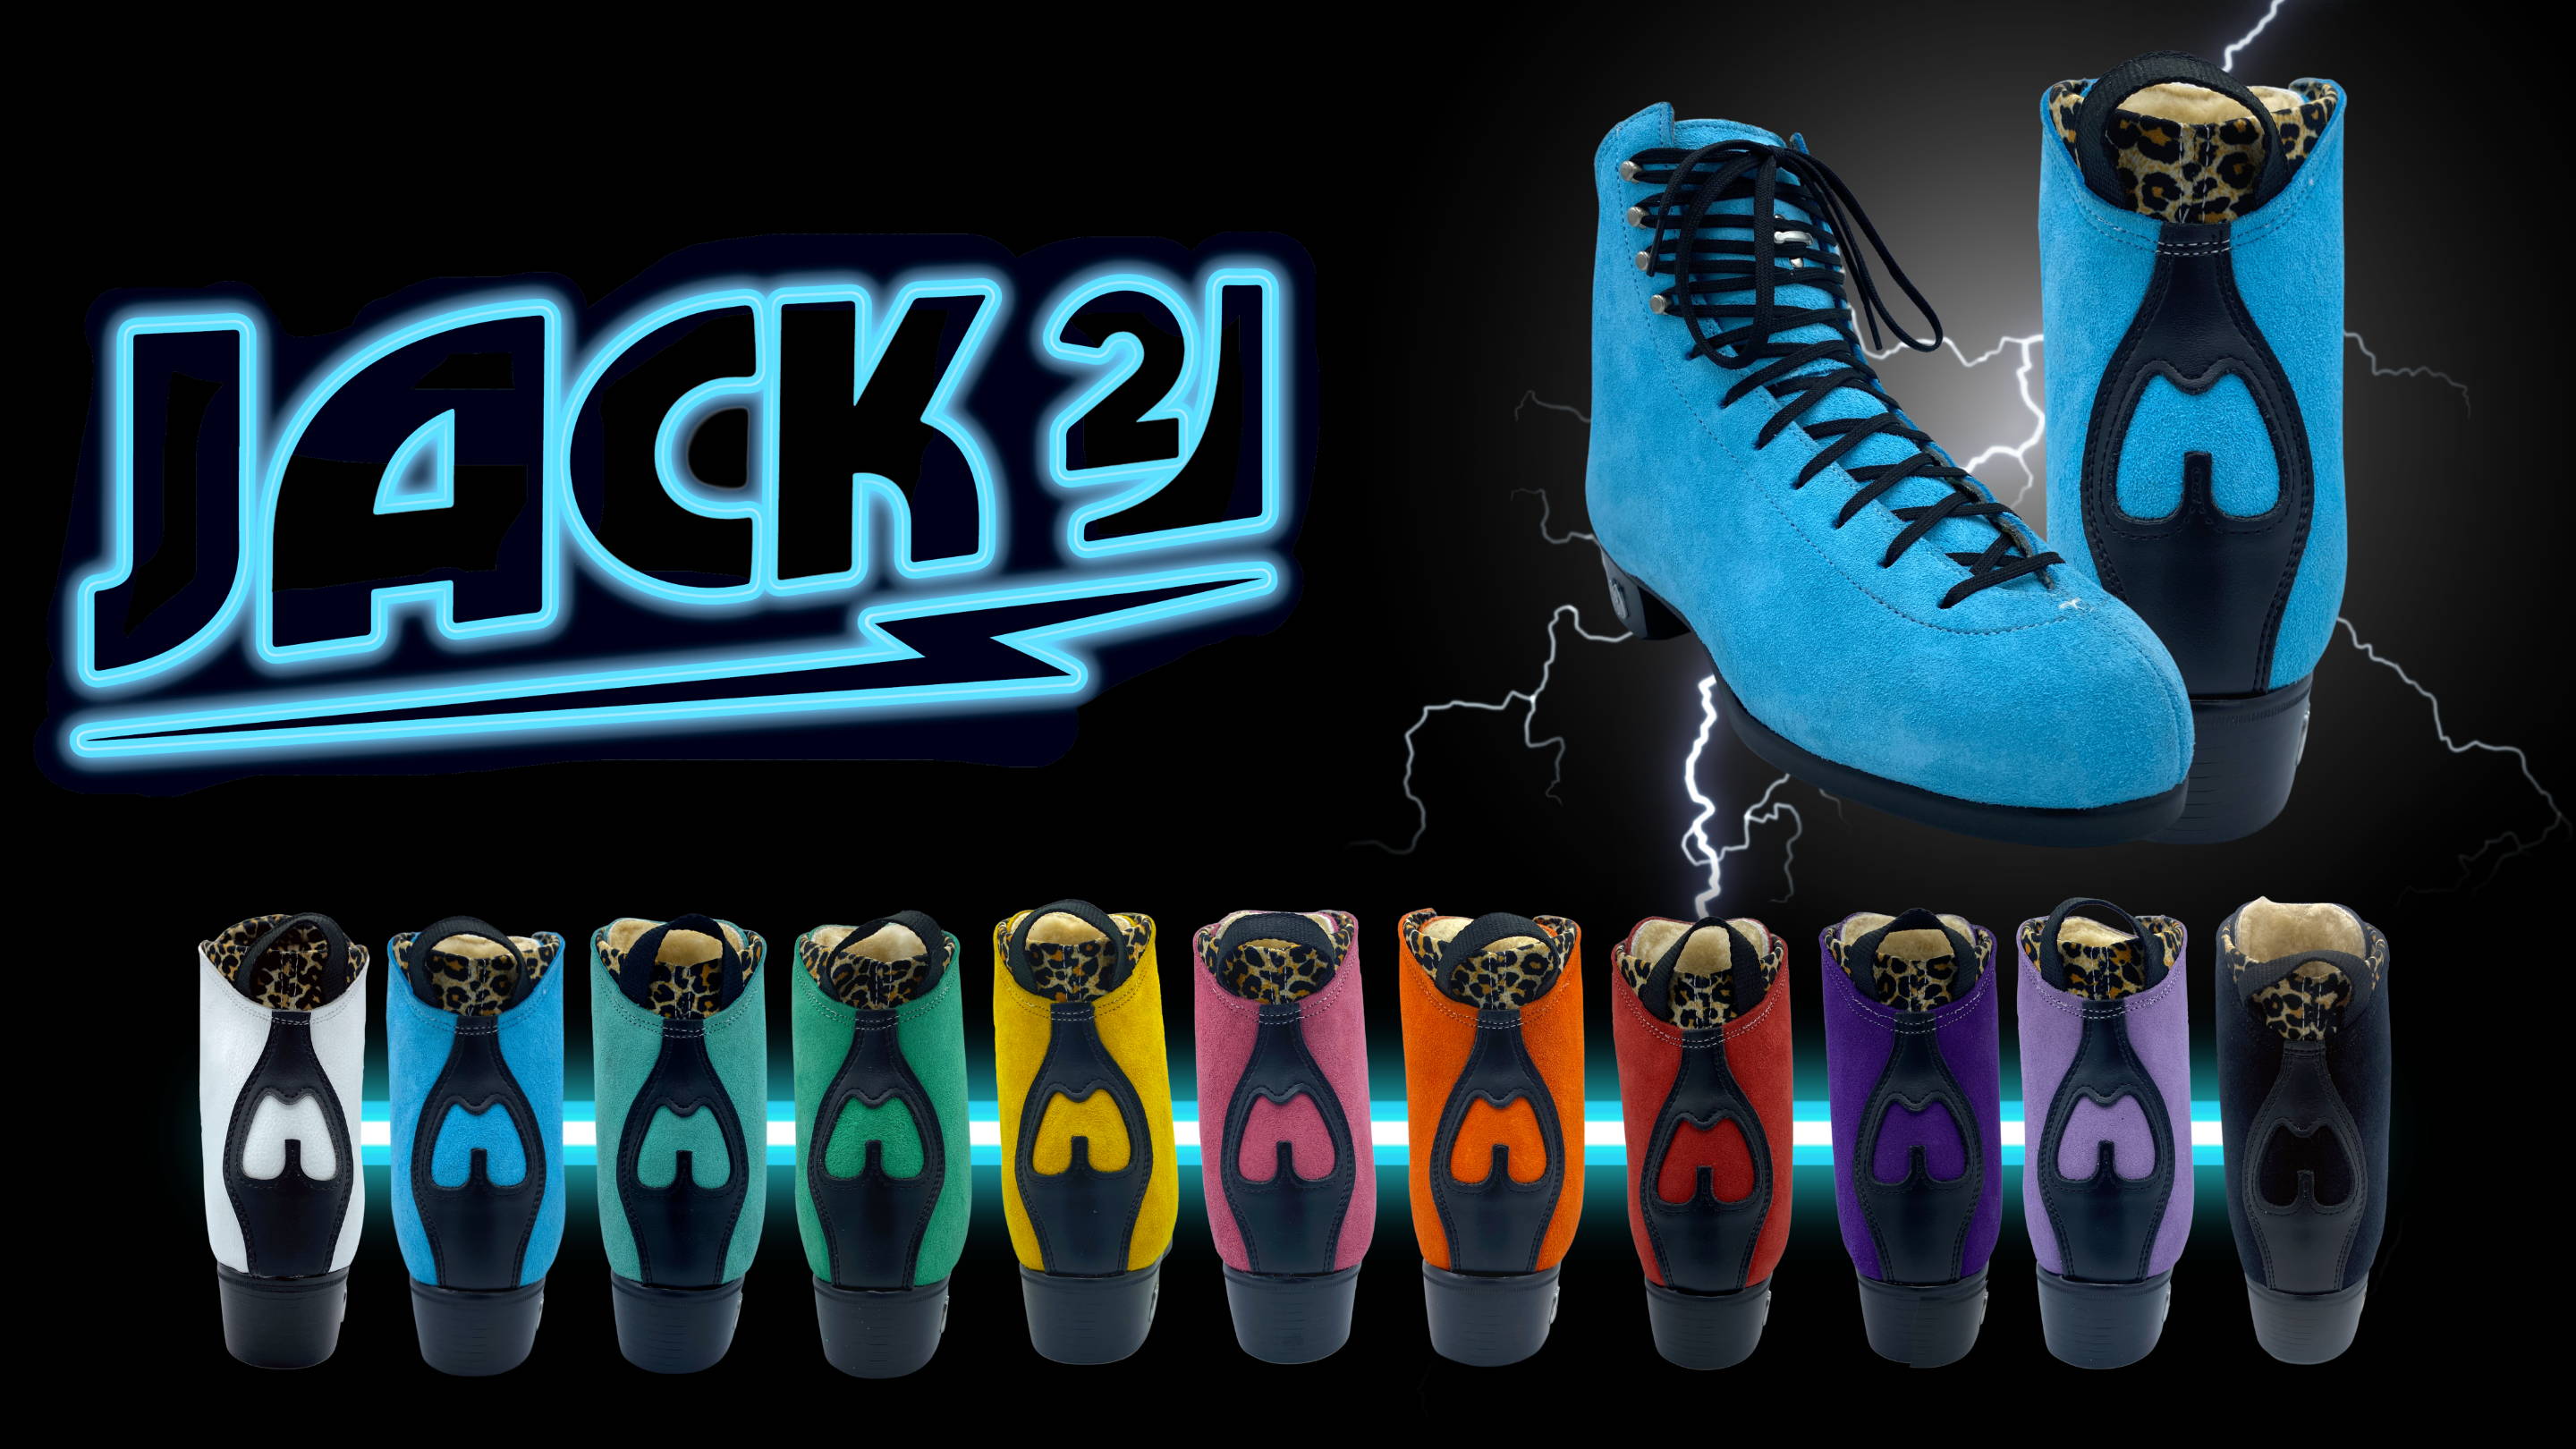 Jack 2 Skates Product Image. links to jack 2 product page